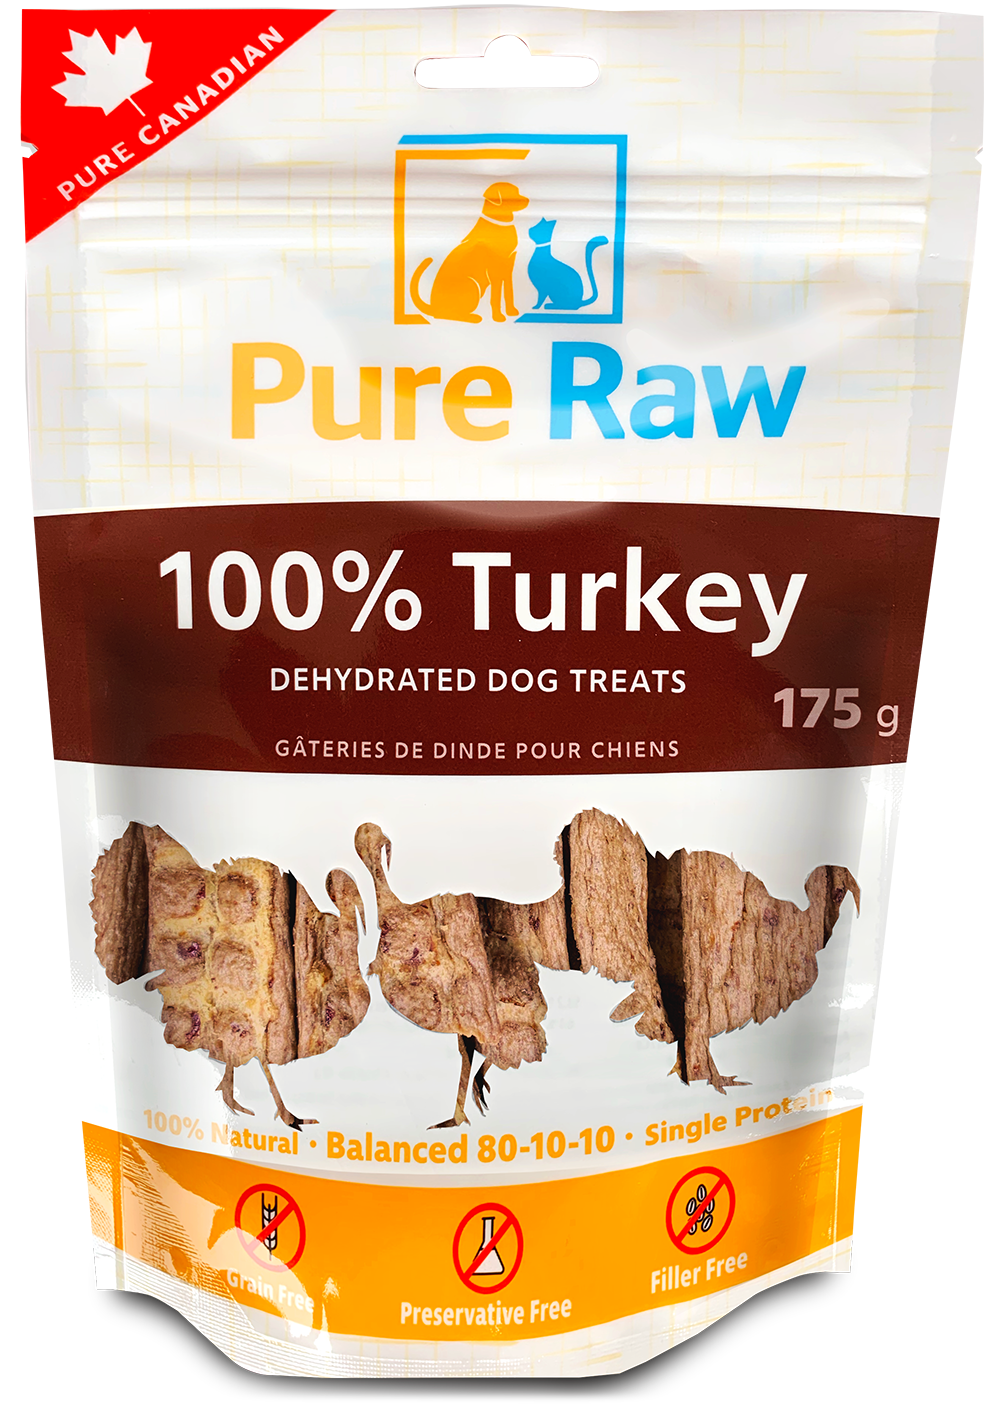 Dehydrated Dog Treats - Turkey - Front